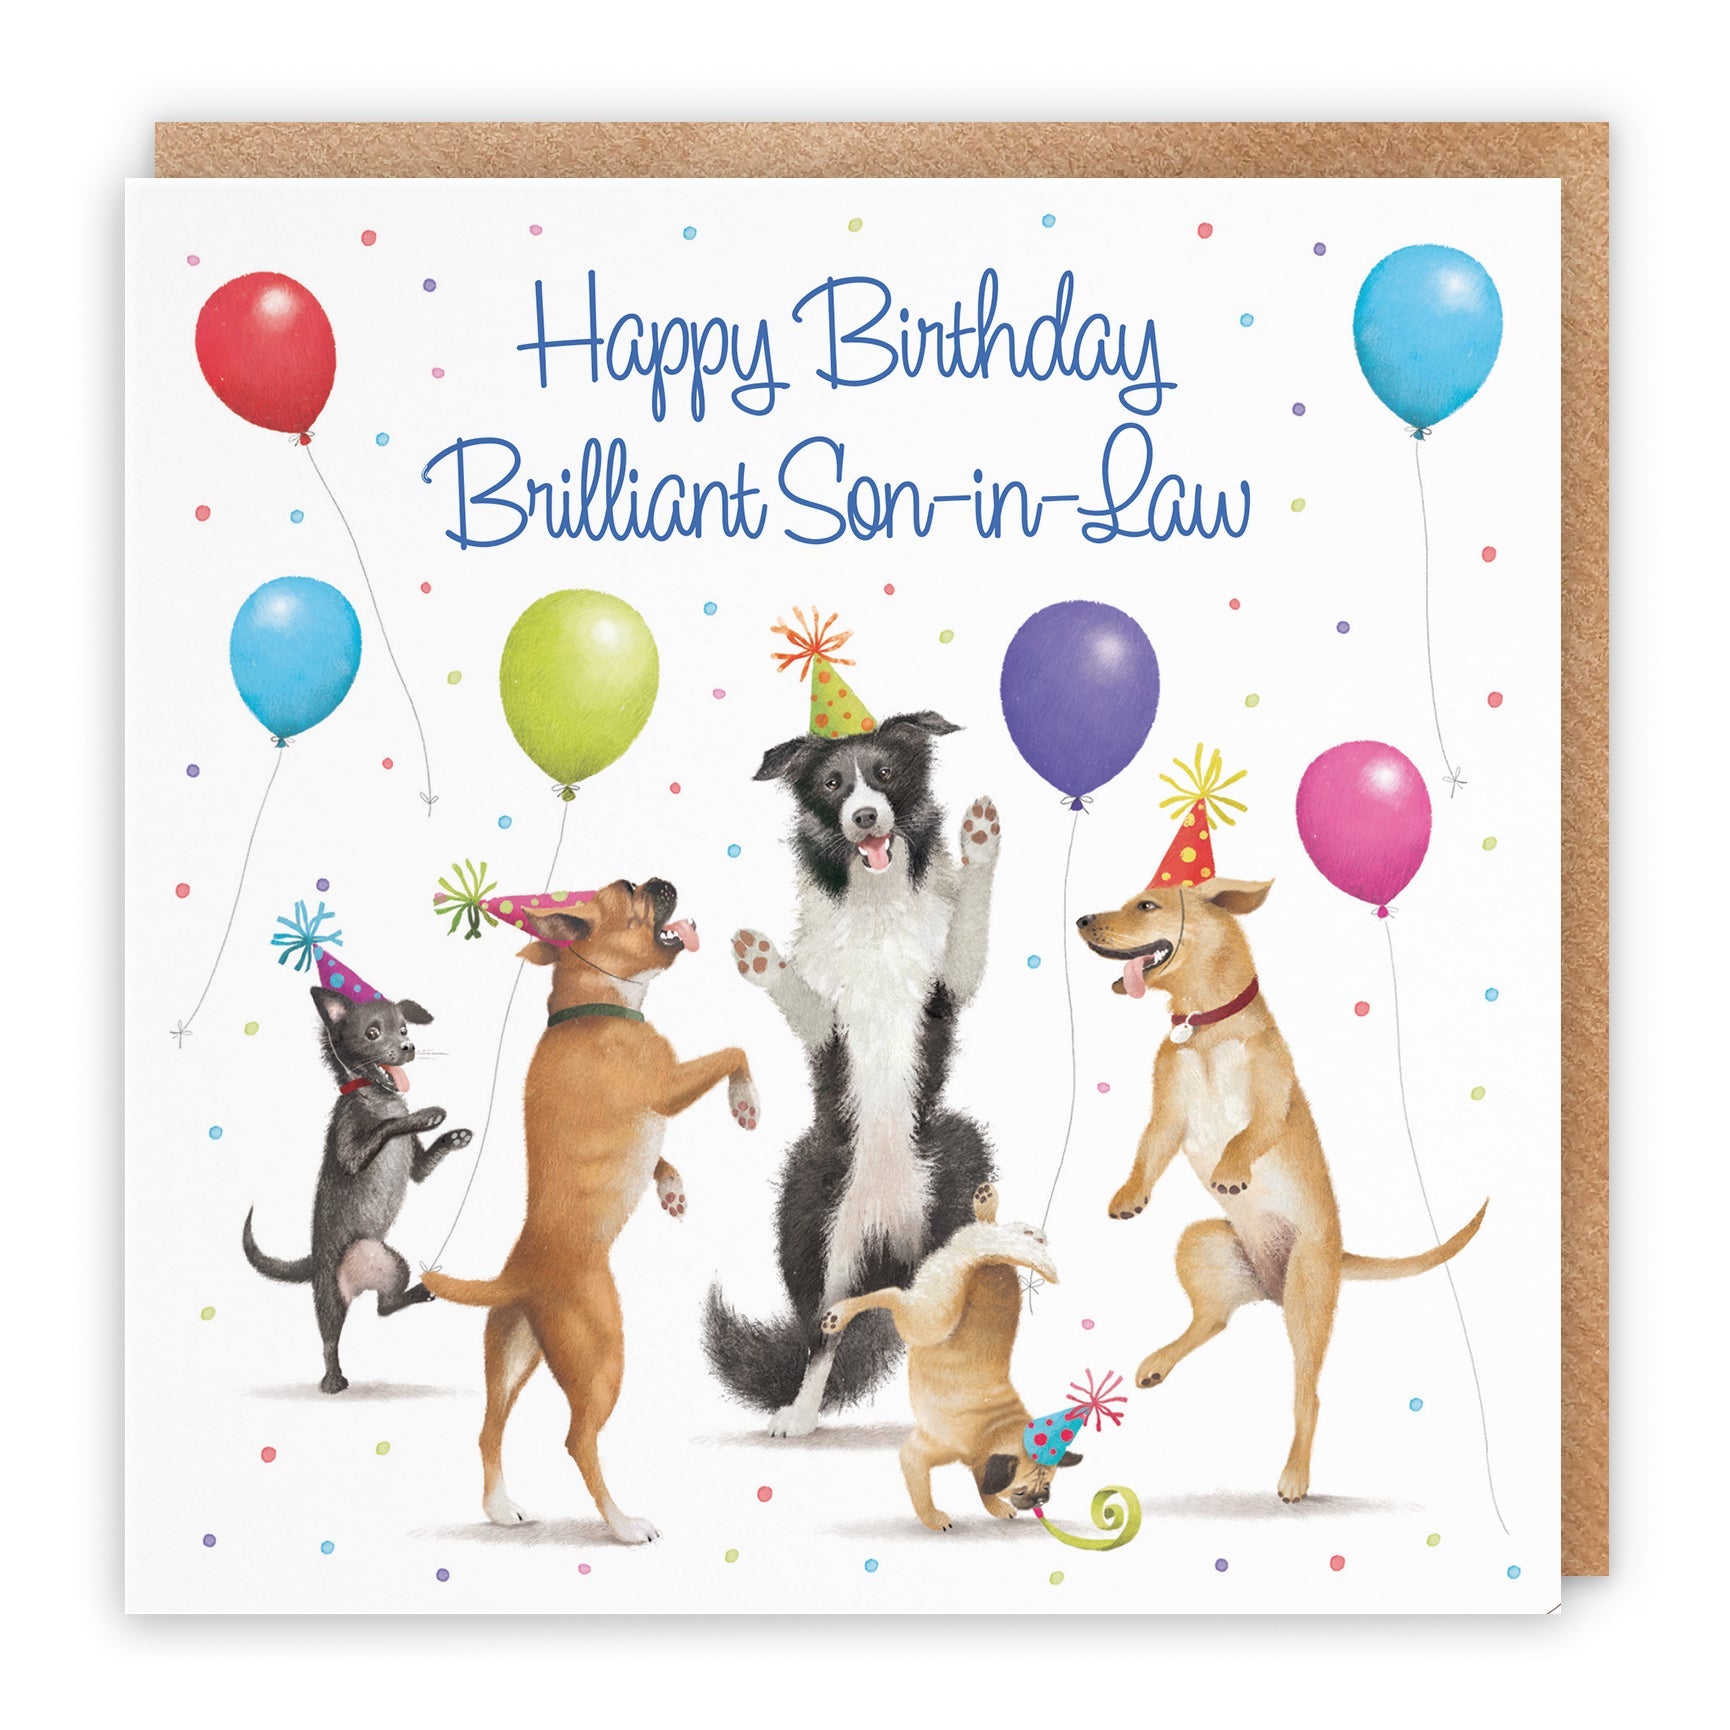 Son In Law Birthday Card - Dancing Dogs